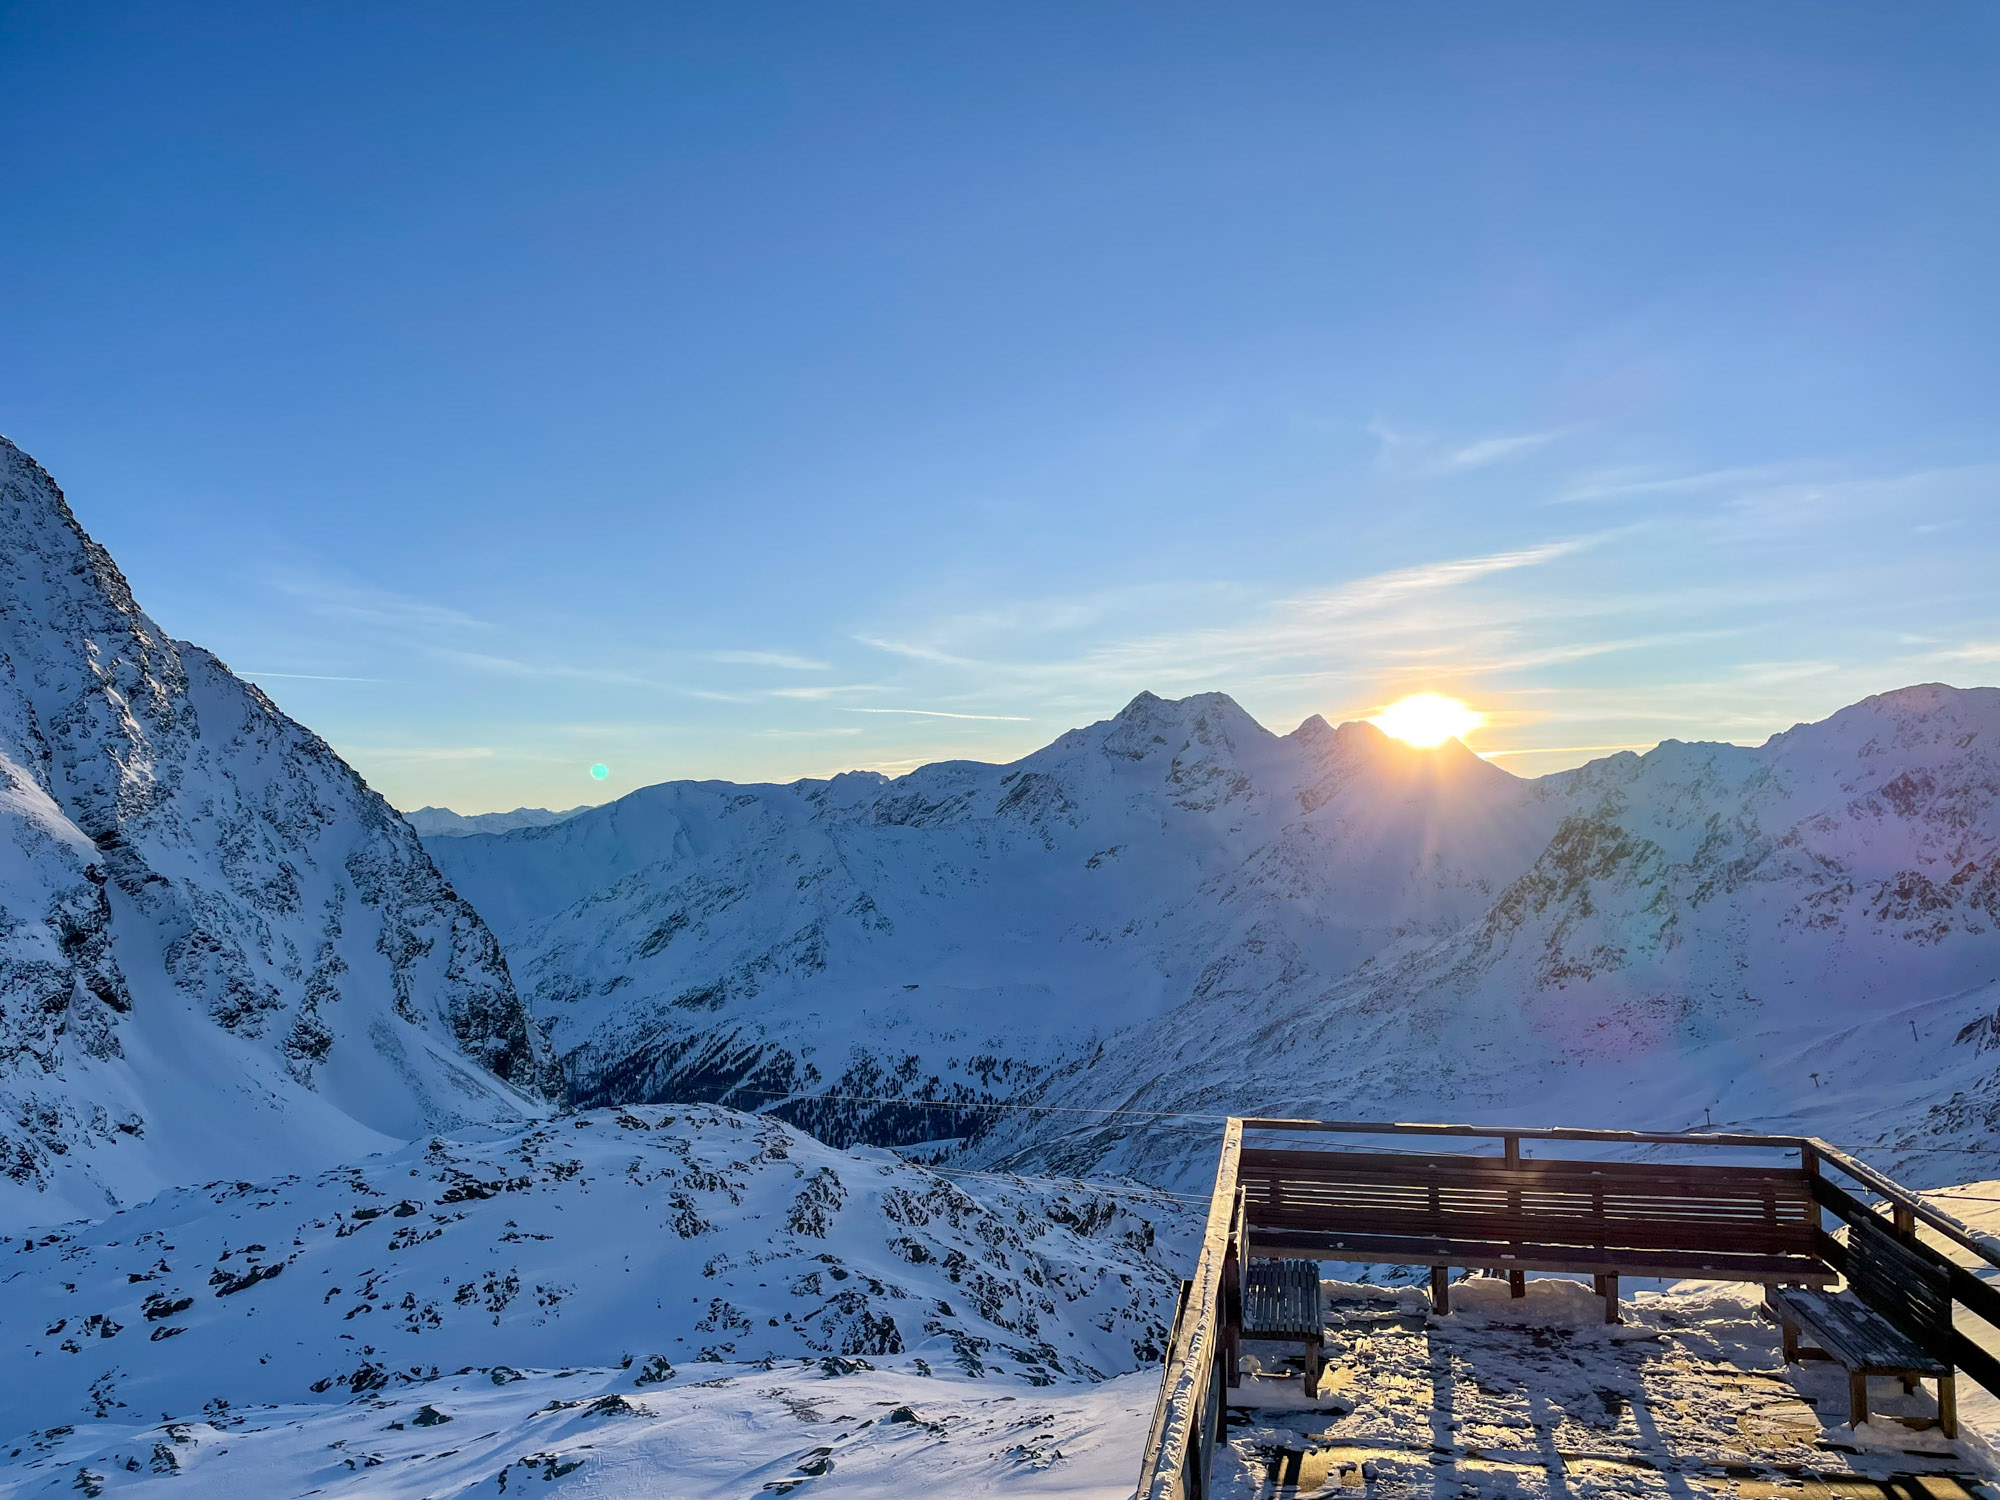 MICE Ladies "Ski meets Tradition" – the Winter Edition in Südtirol